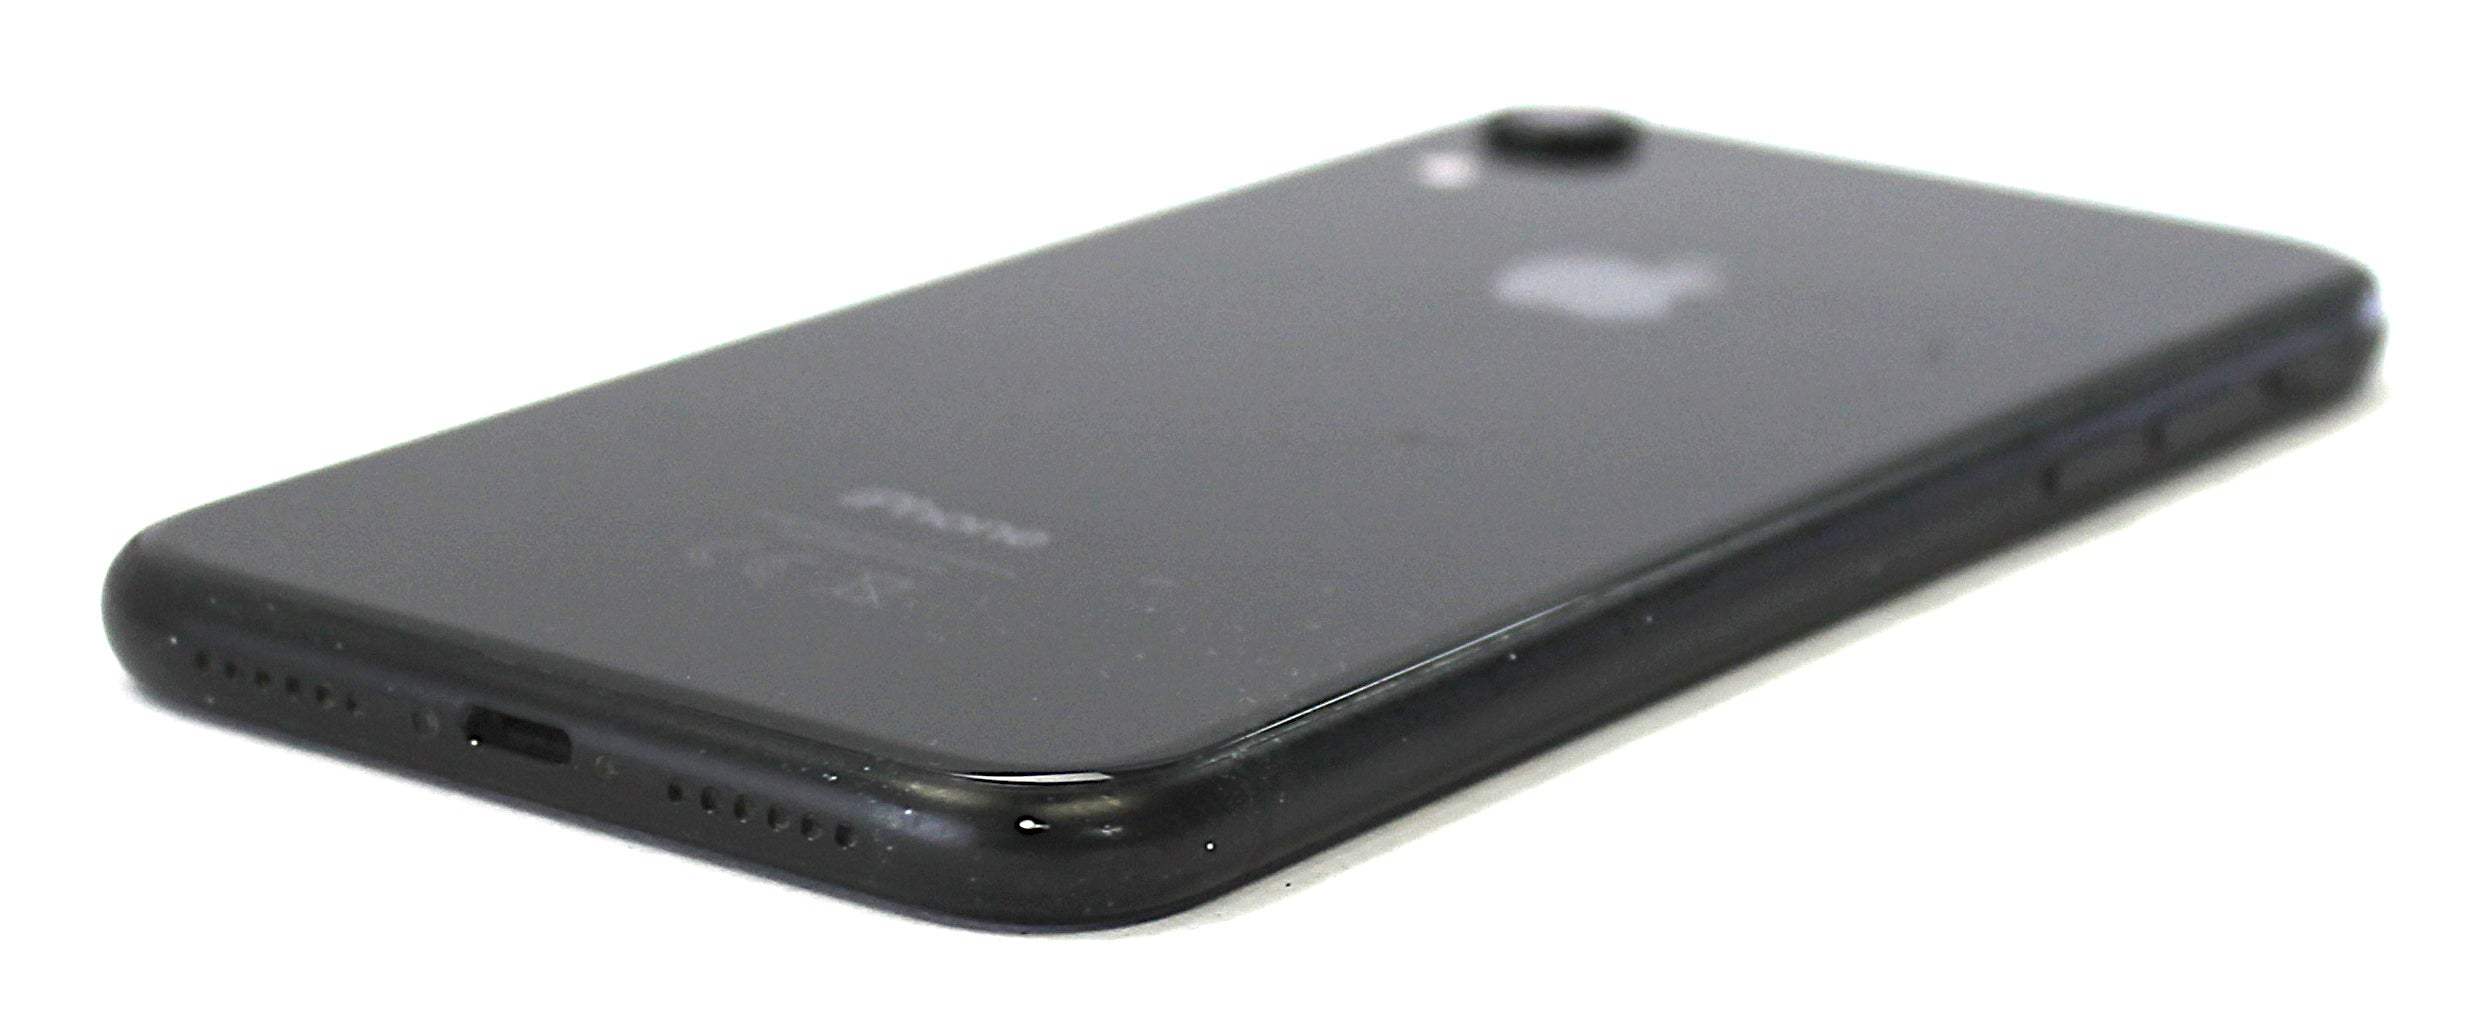 Apple iPhone XR Smartphone, 64GB, Network Unlocked, Black, A2105